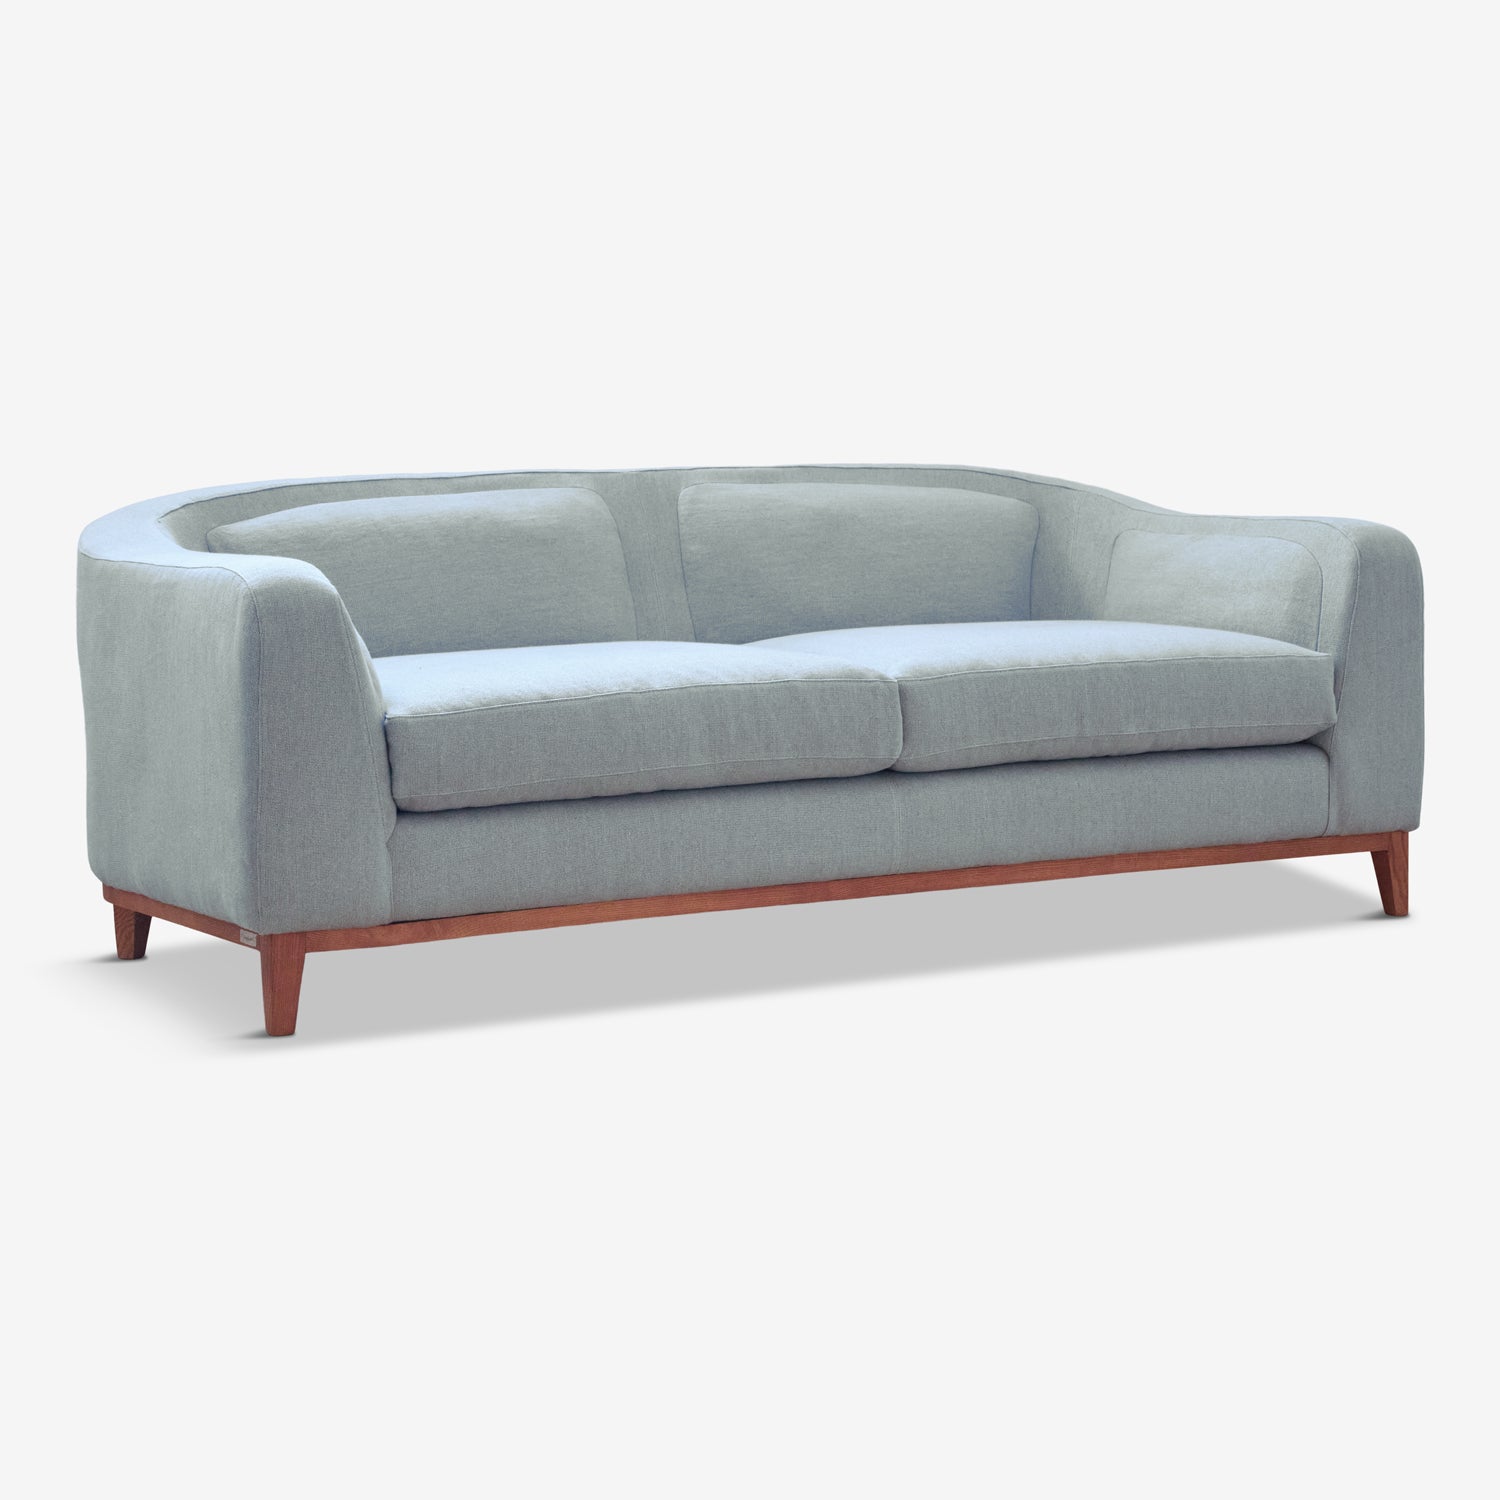 Zeno Sofa - Compact Modern Design. green linen upholstery.